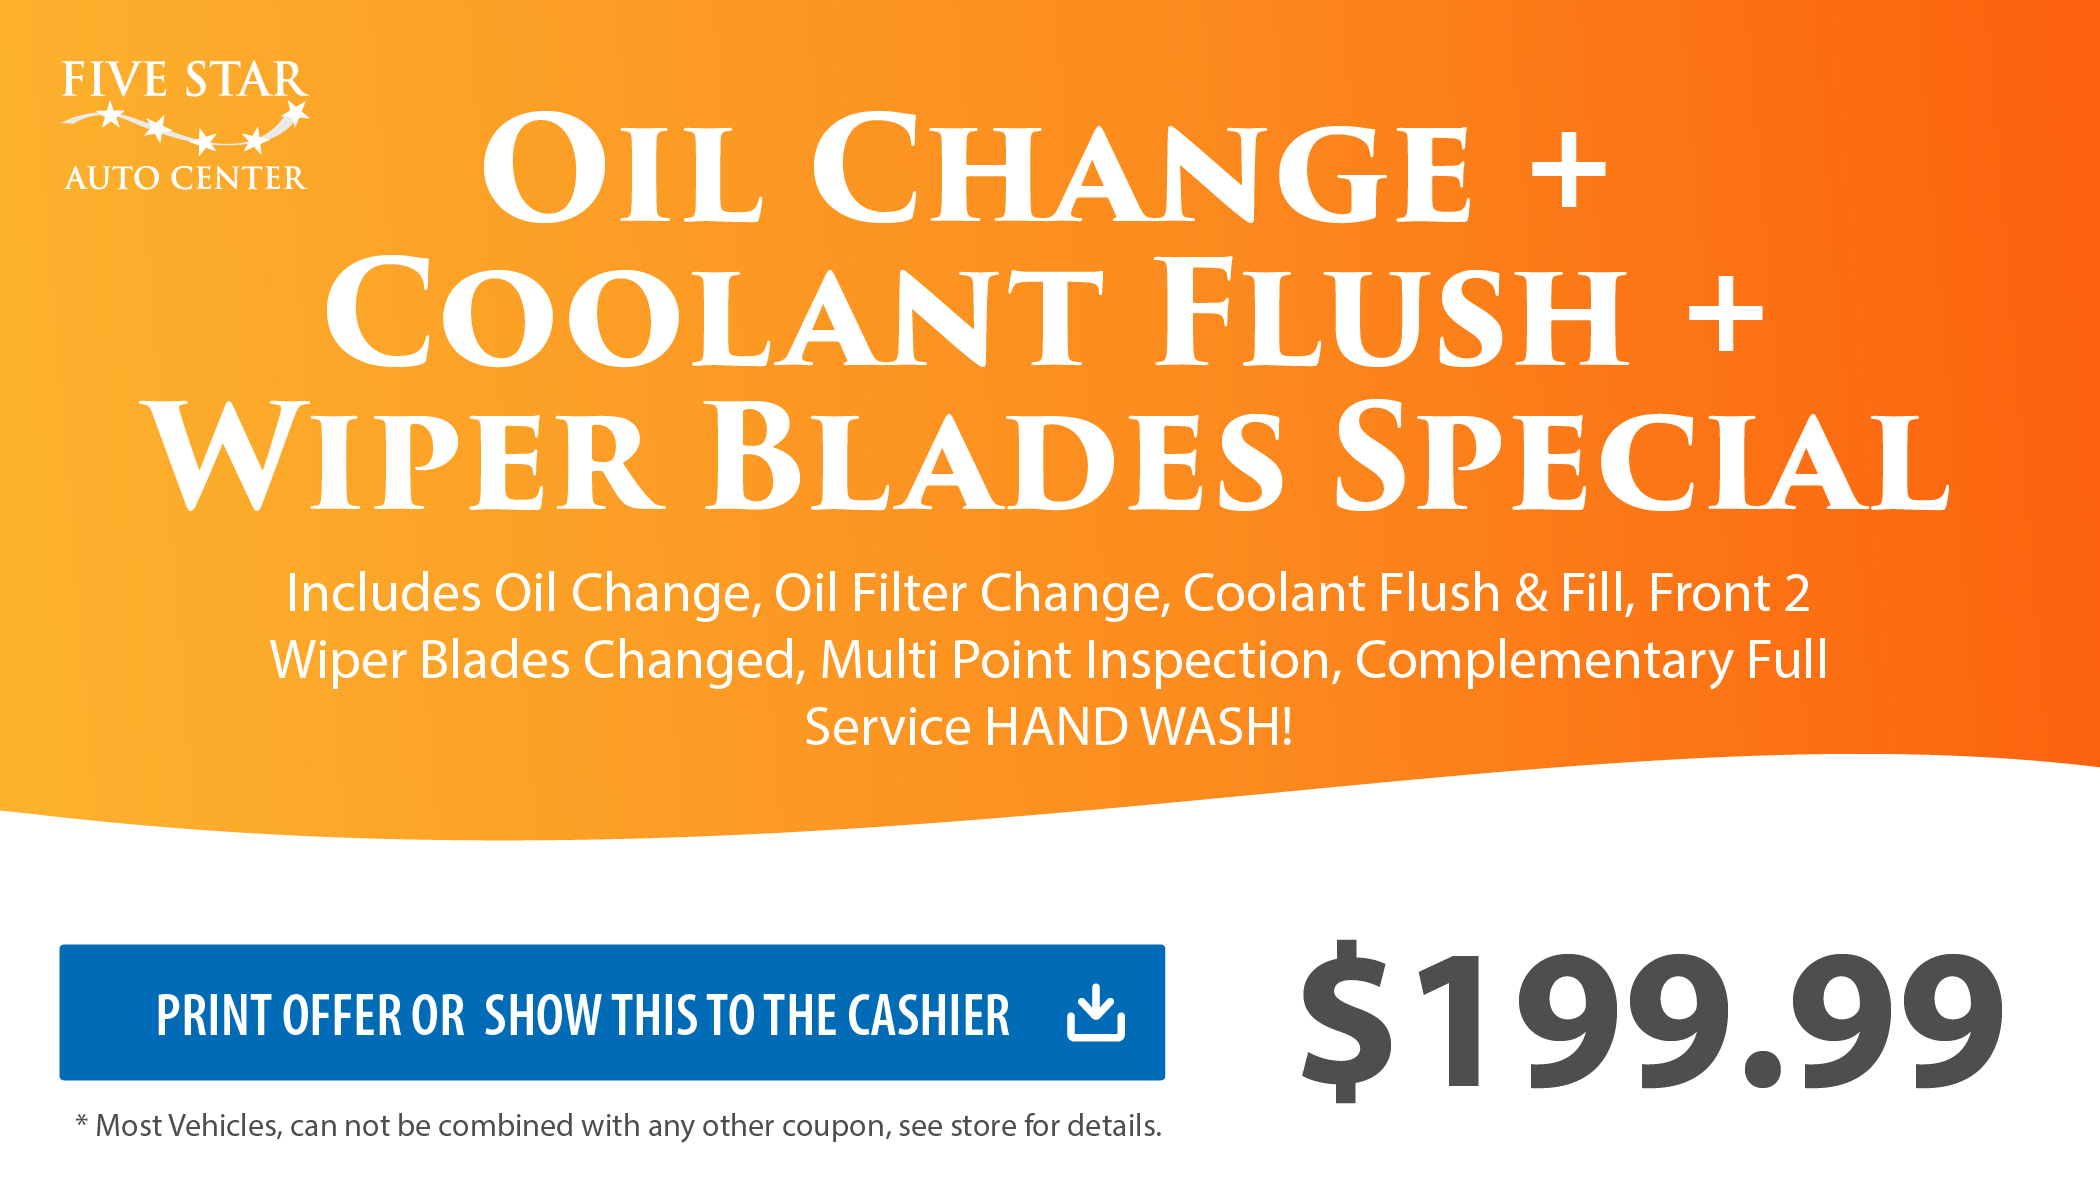 Oil Change, Coolant Flush, Wiper Blades - $49.99